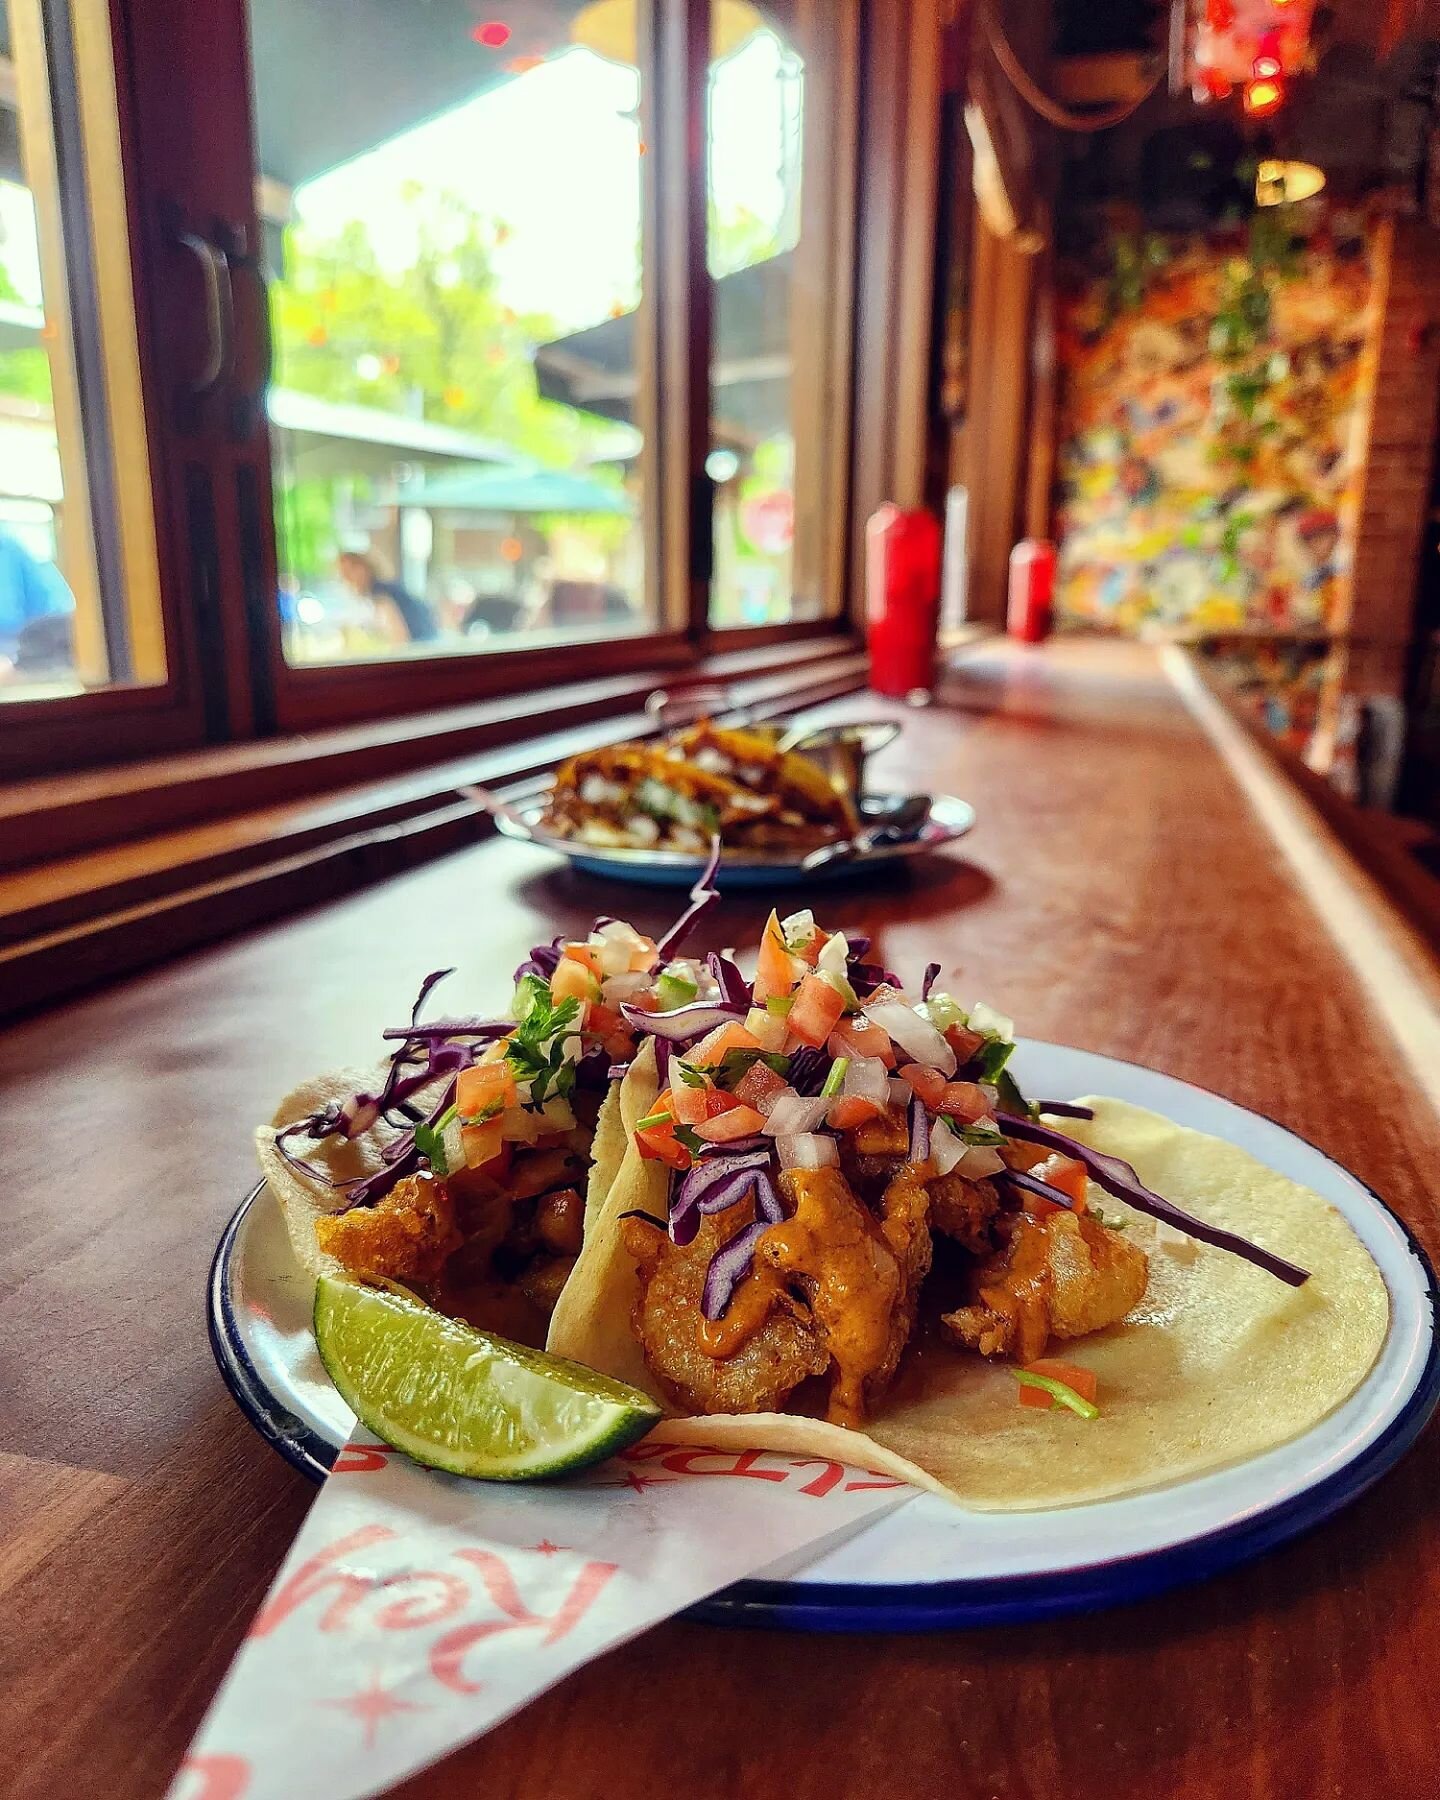 Weekend vibes with Shrimp Tacos and Birria Quesdillas 🌮✨️ @elreymezcalbar 
.
.
.
.
.
#food #foodie #foodpics #foodporn #yelpelite #yelp #millennial #brampton #tacos #Mexicanfood #drinks #weekend #mississauga #toronto #torontofood #lifestyle